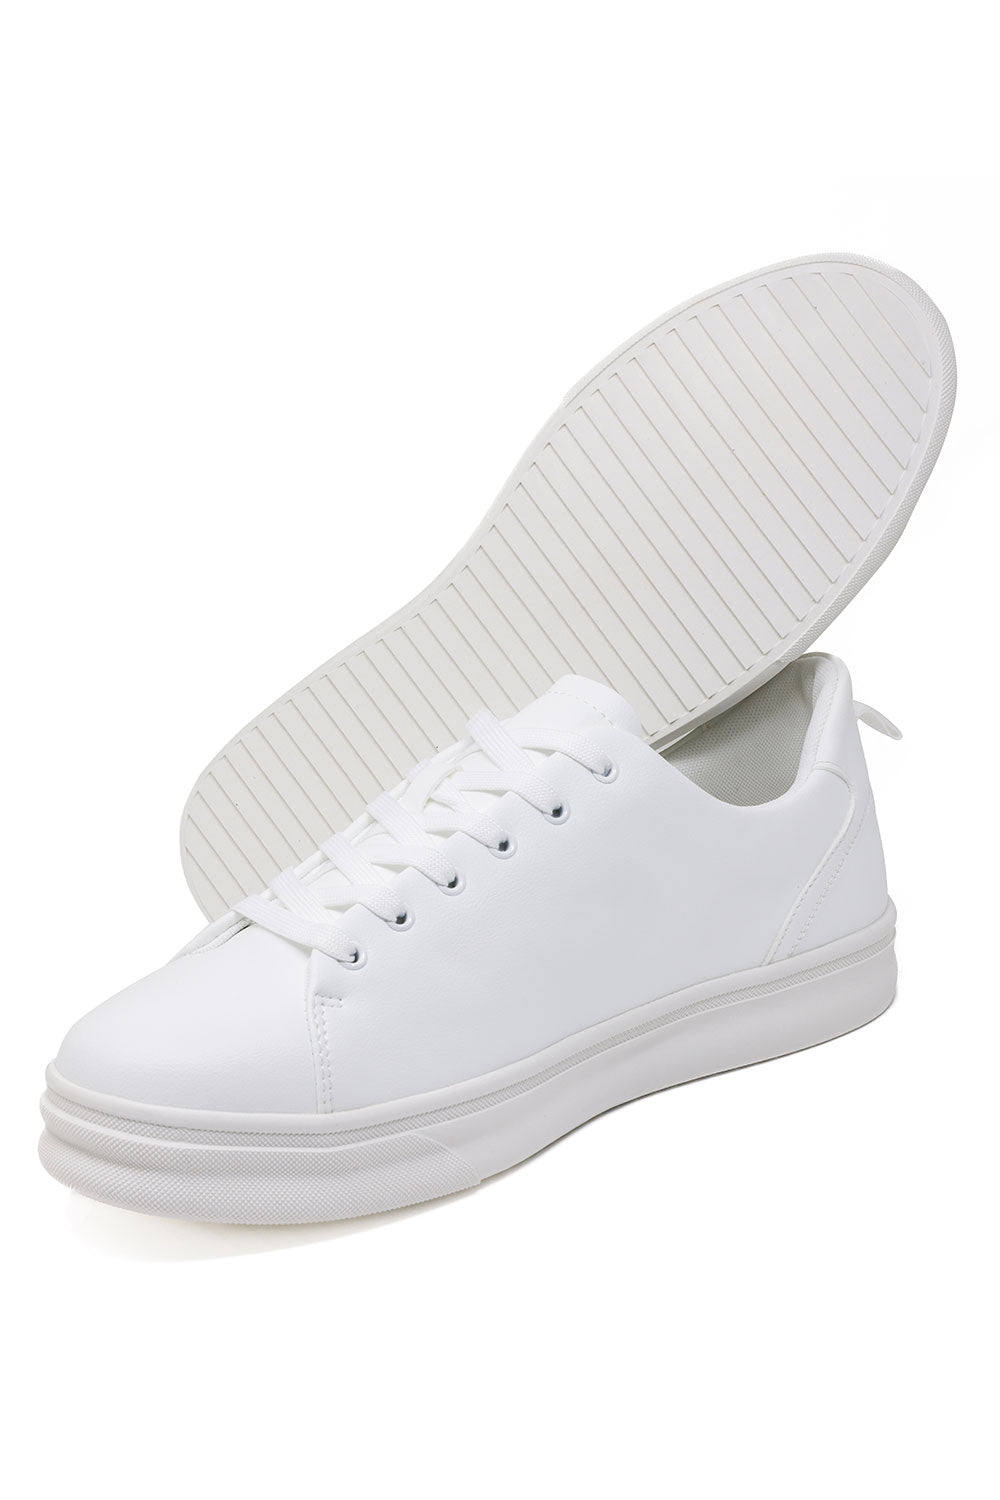 Barabas Men's Checkered Pattern Premium Leather Sneakers 4SK04 White